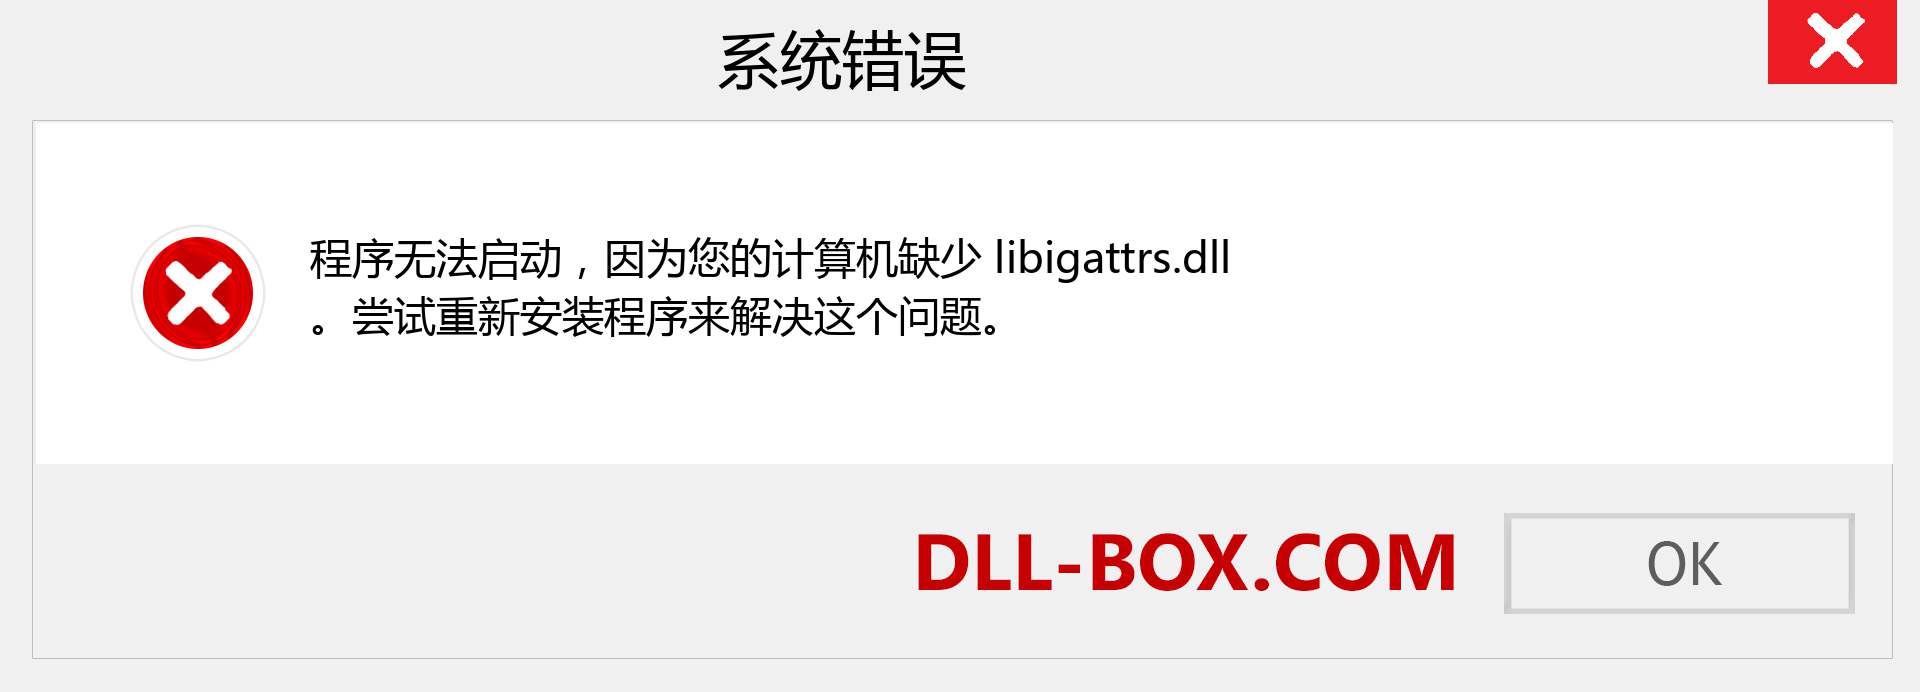 libigattrs.dll 文件丢失？。 适用于 Windows 7、8、10 的下载 - 修复 Windows、照片、图像上的 libigattrs dll 丢失错误